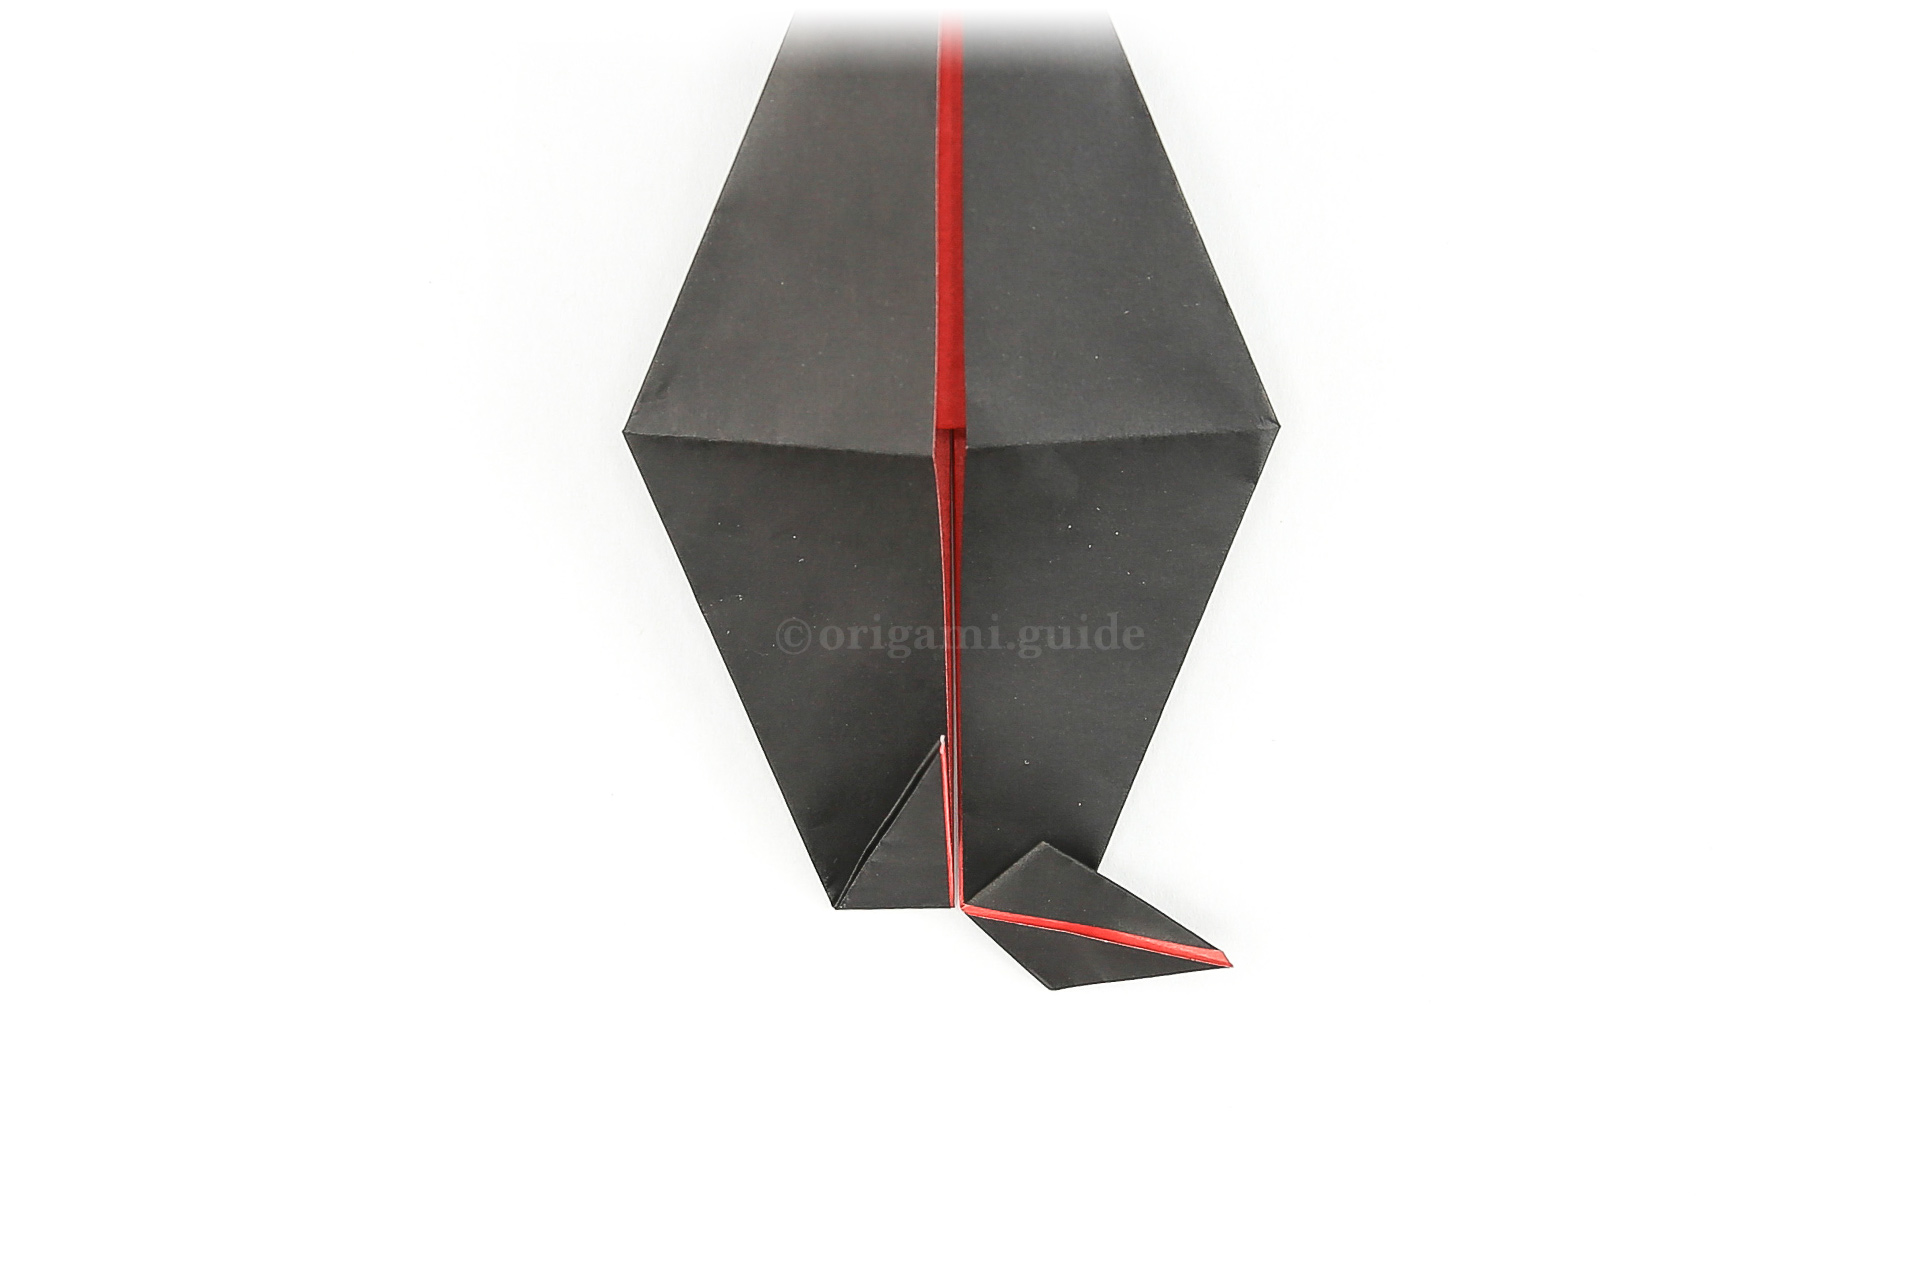 Open the flap and flatten it into a sideways kite shape as shown.